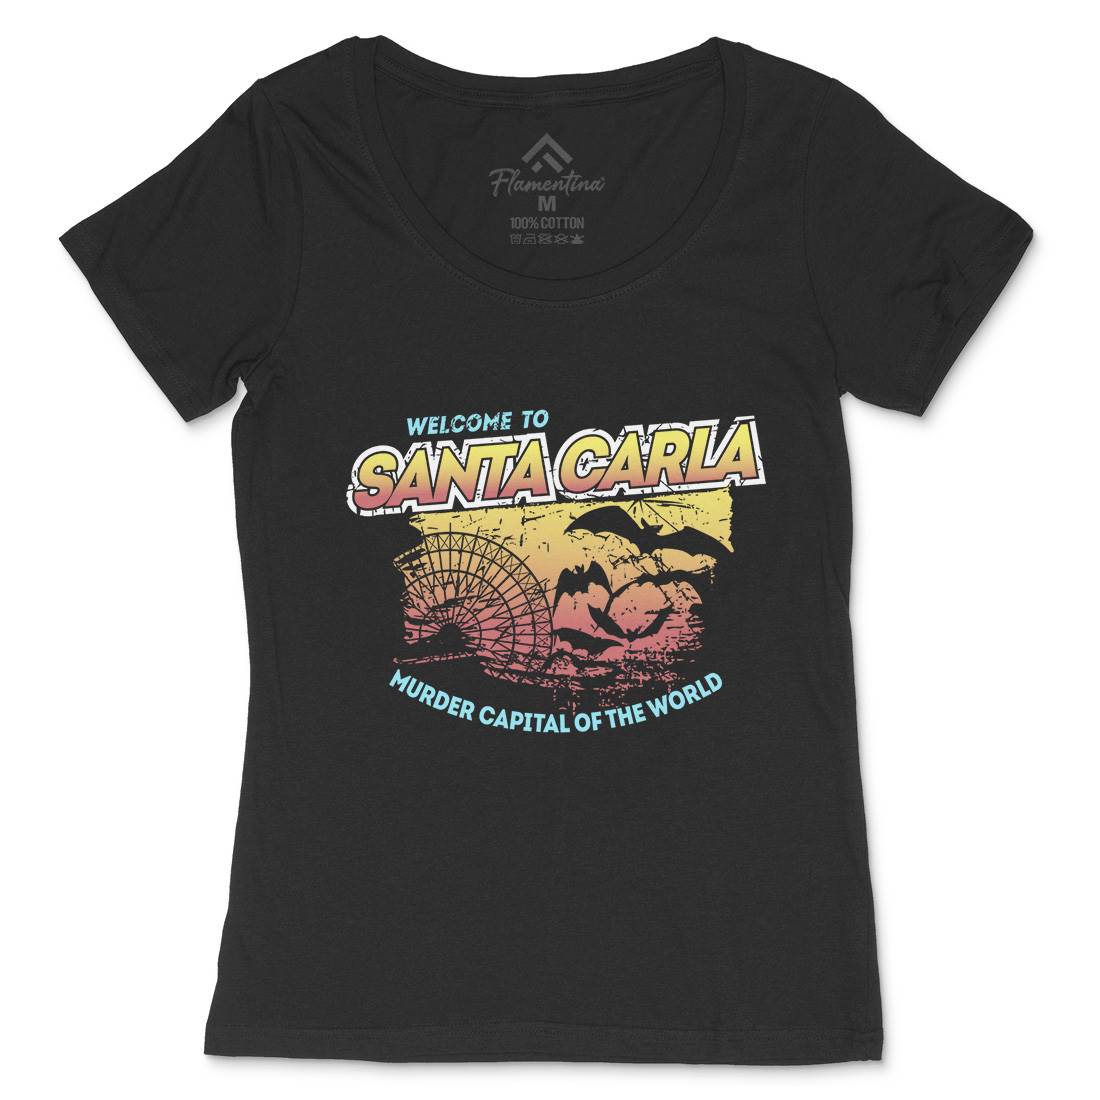 Santa Carla Womens Scoop Neck T-Shirt Horror D369